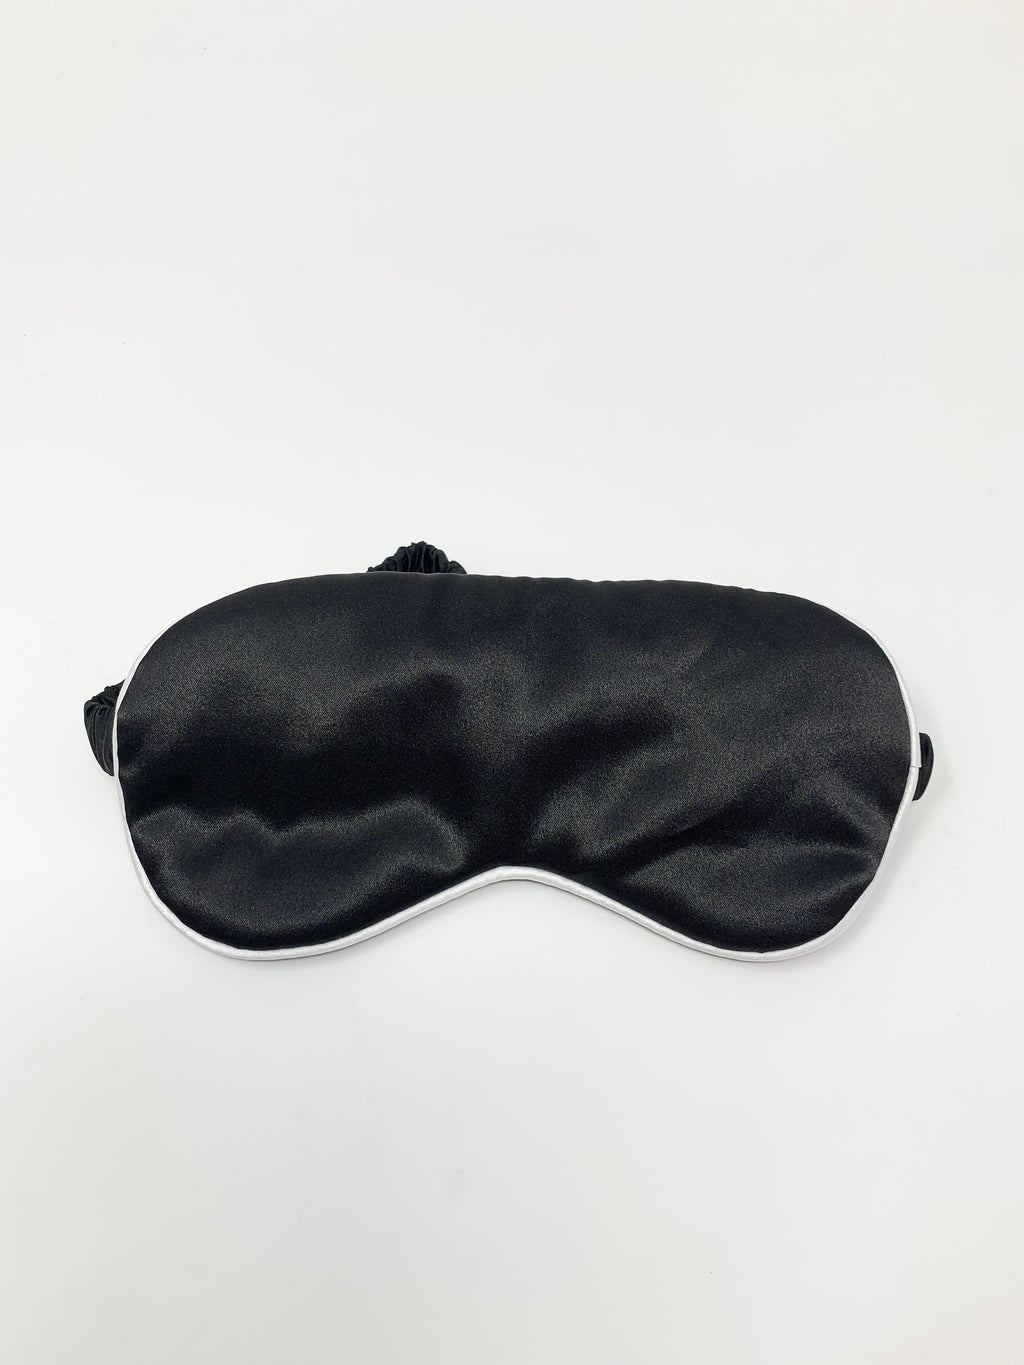 Pampered and Polished Sleep Mask Set